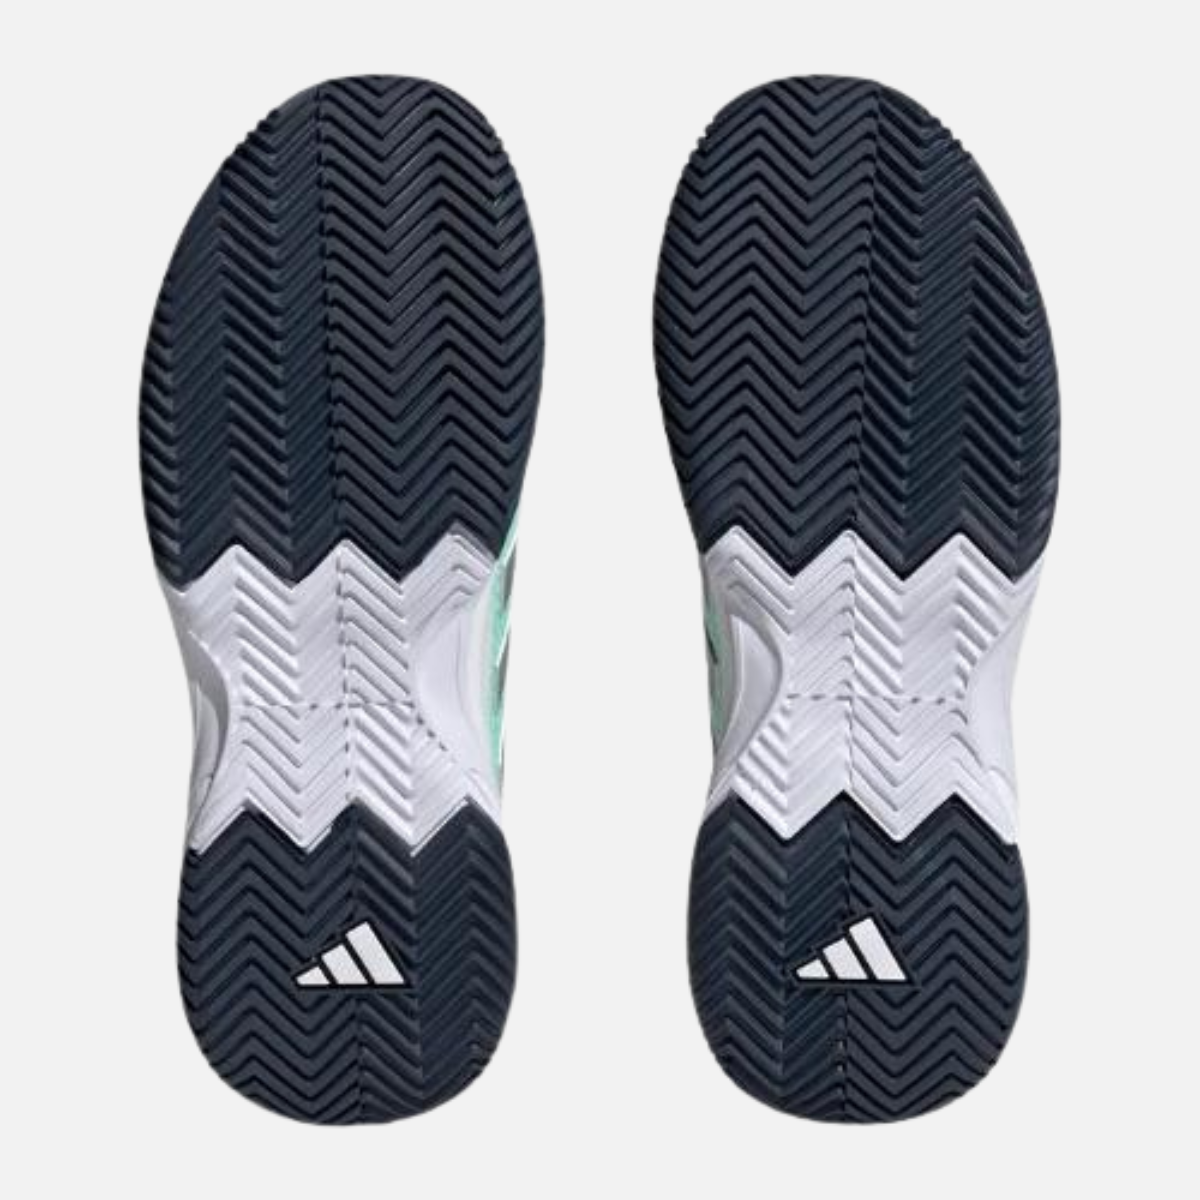 Adidas GameCourt 2.0 Women’s Tennis Shoes